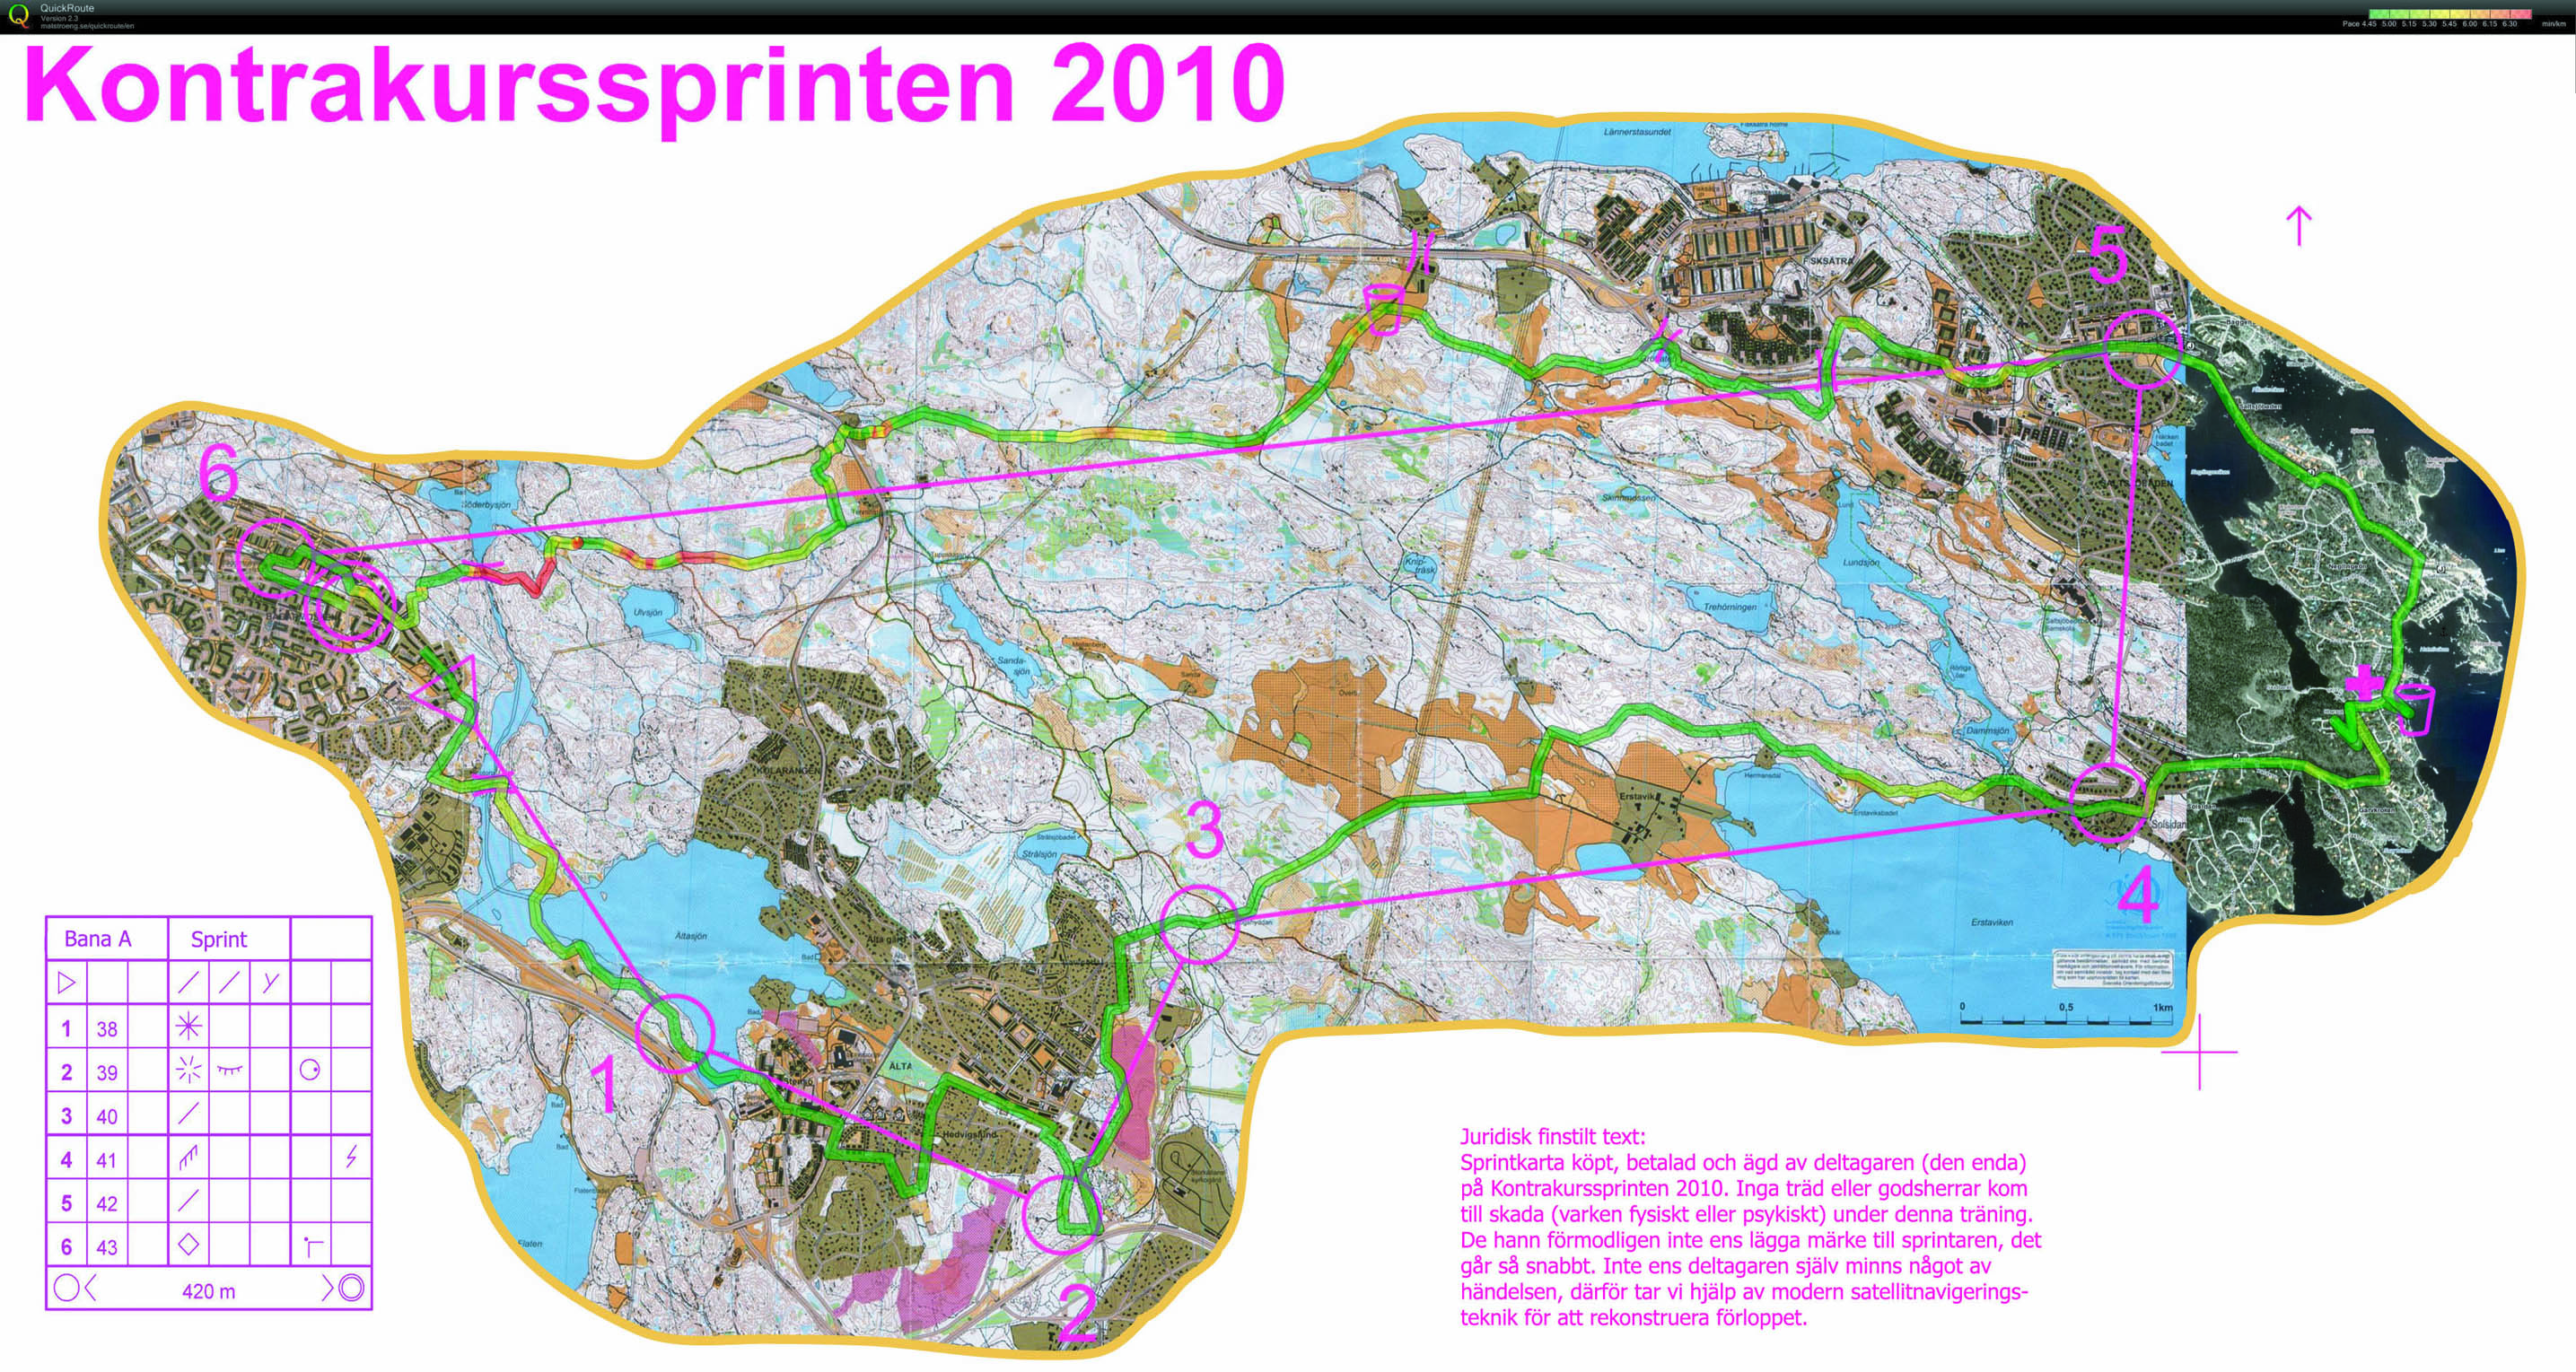 Kontrakurssprinten 2010 (10/05/2010)